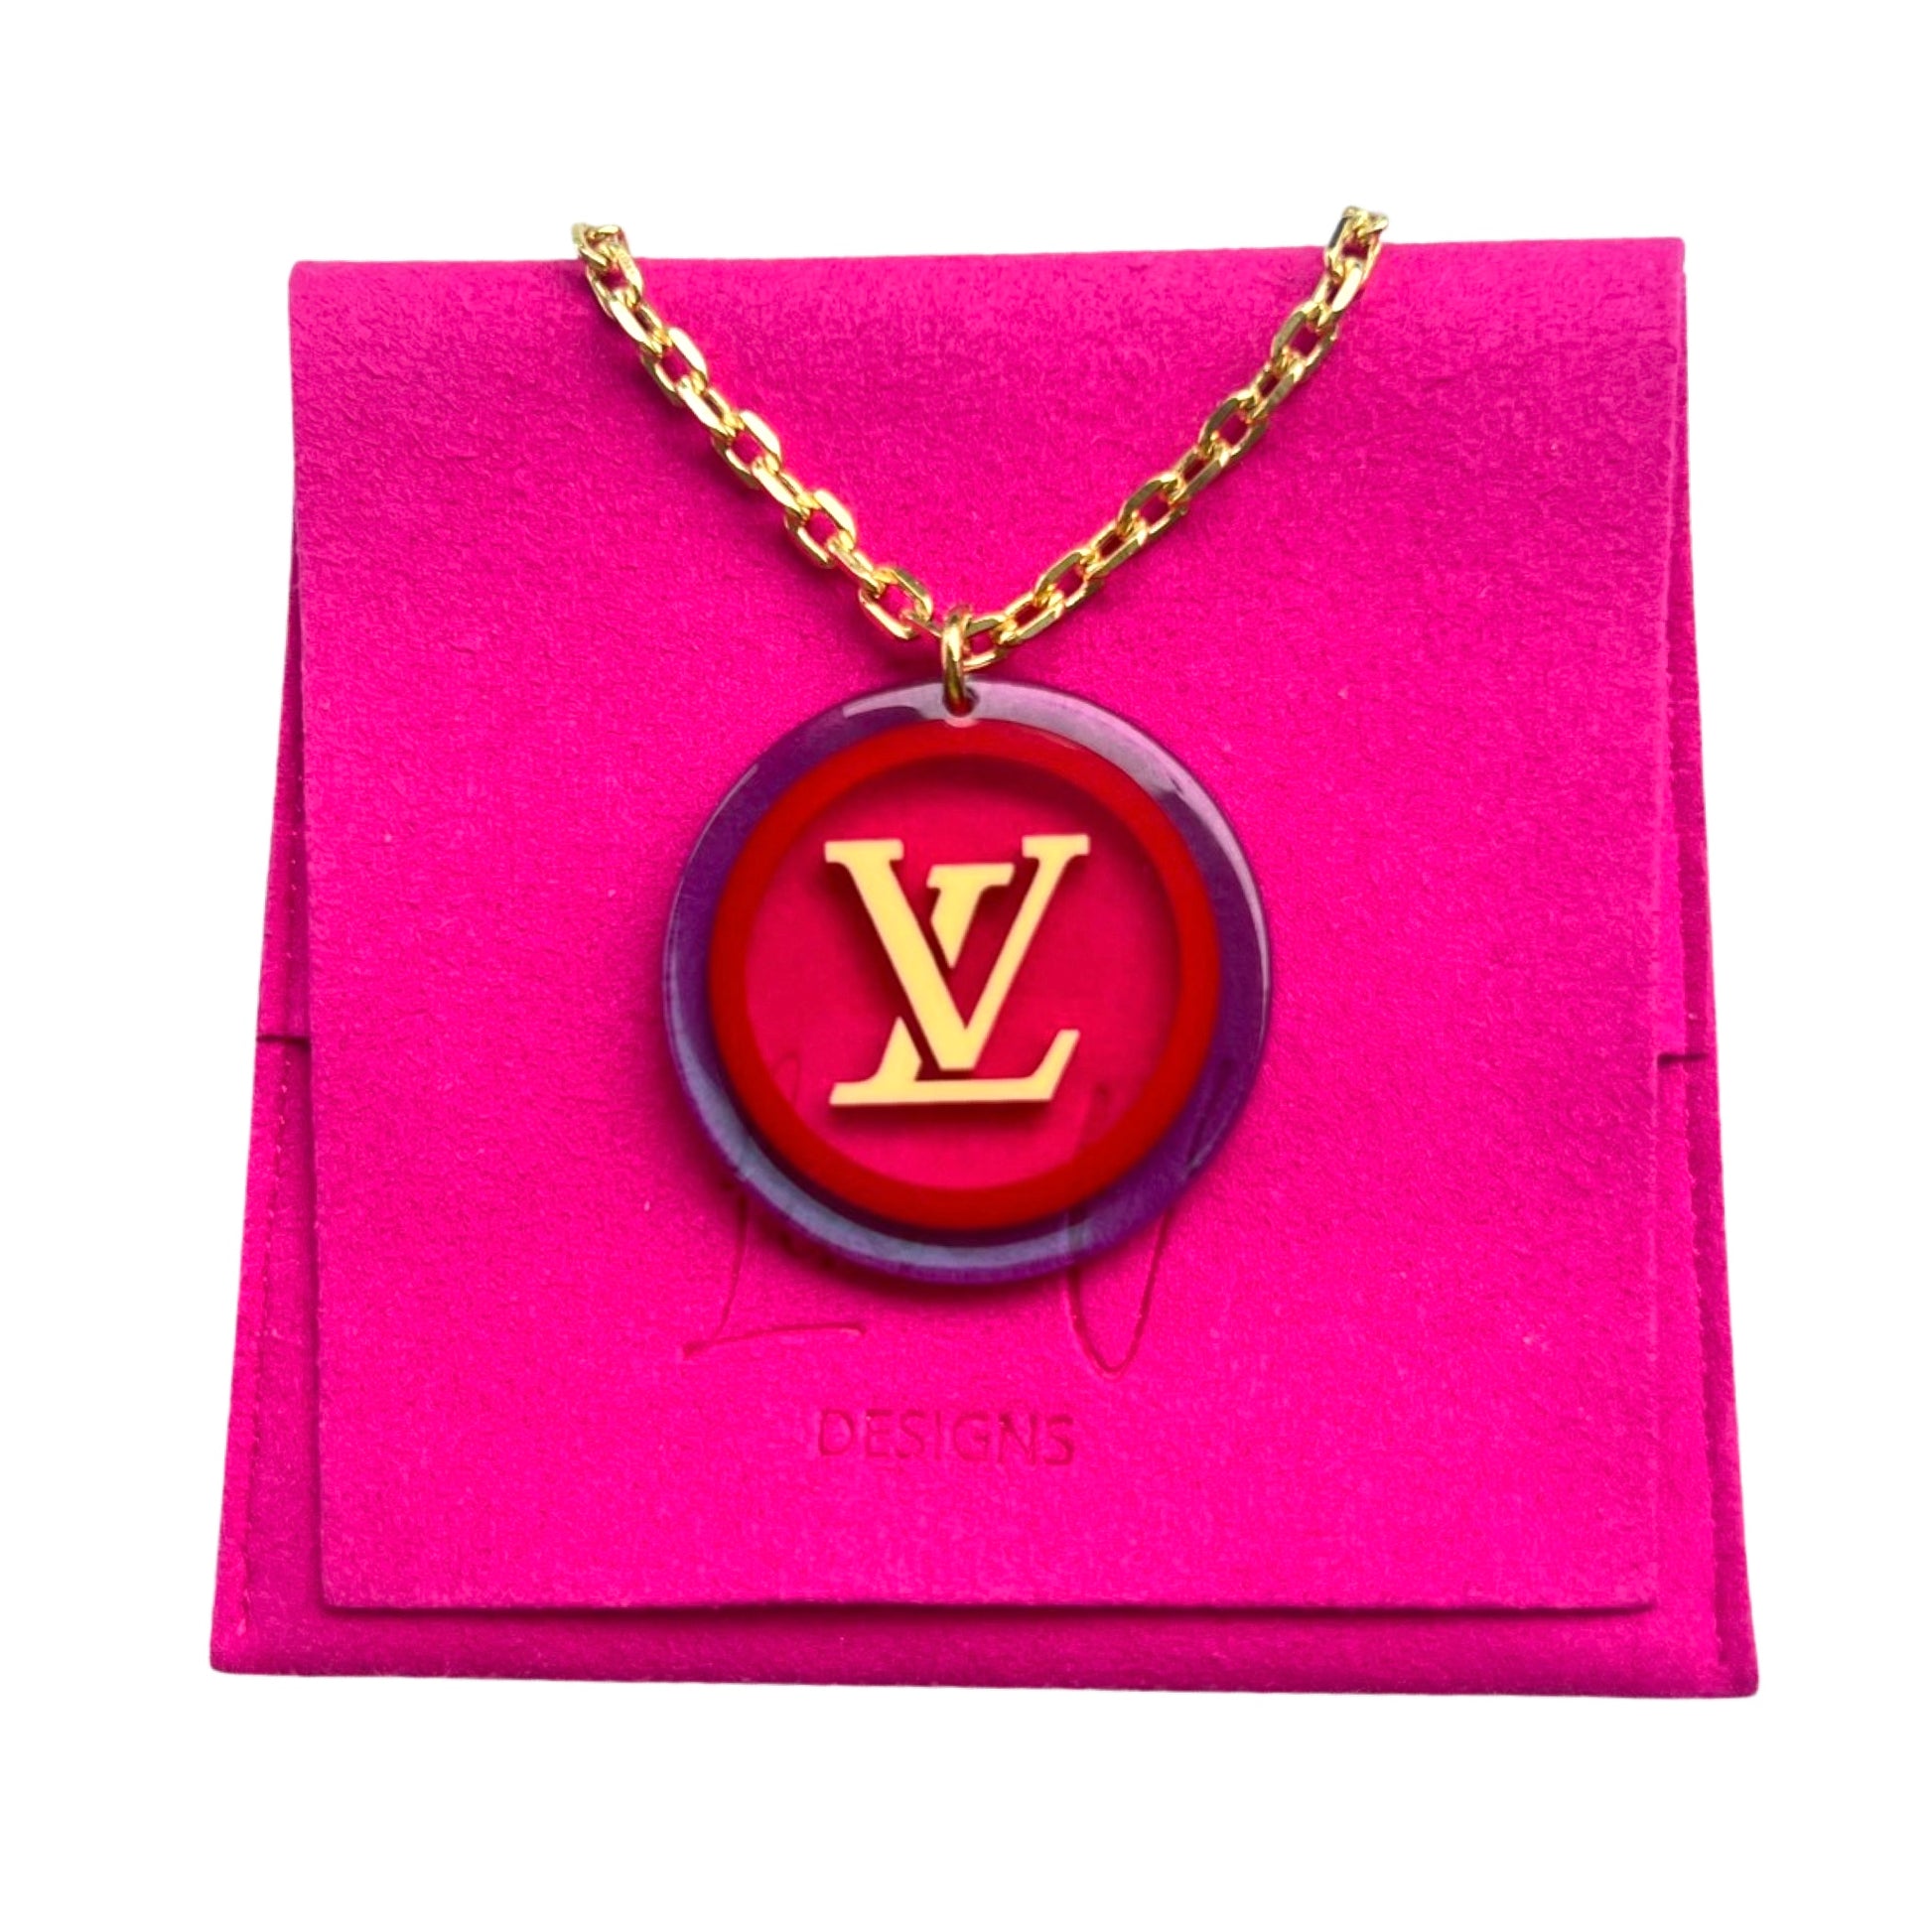 Repurposed Gold Louis Vuitton Keyring & Flower Logo Charm Vintage Bracelet